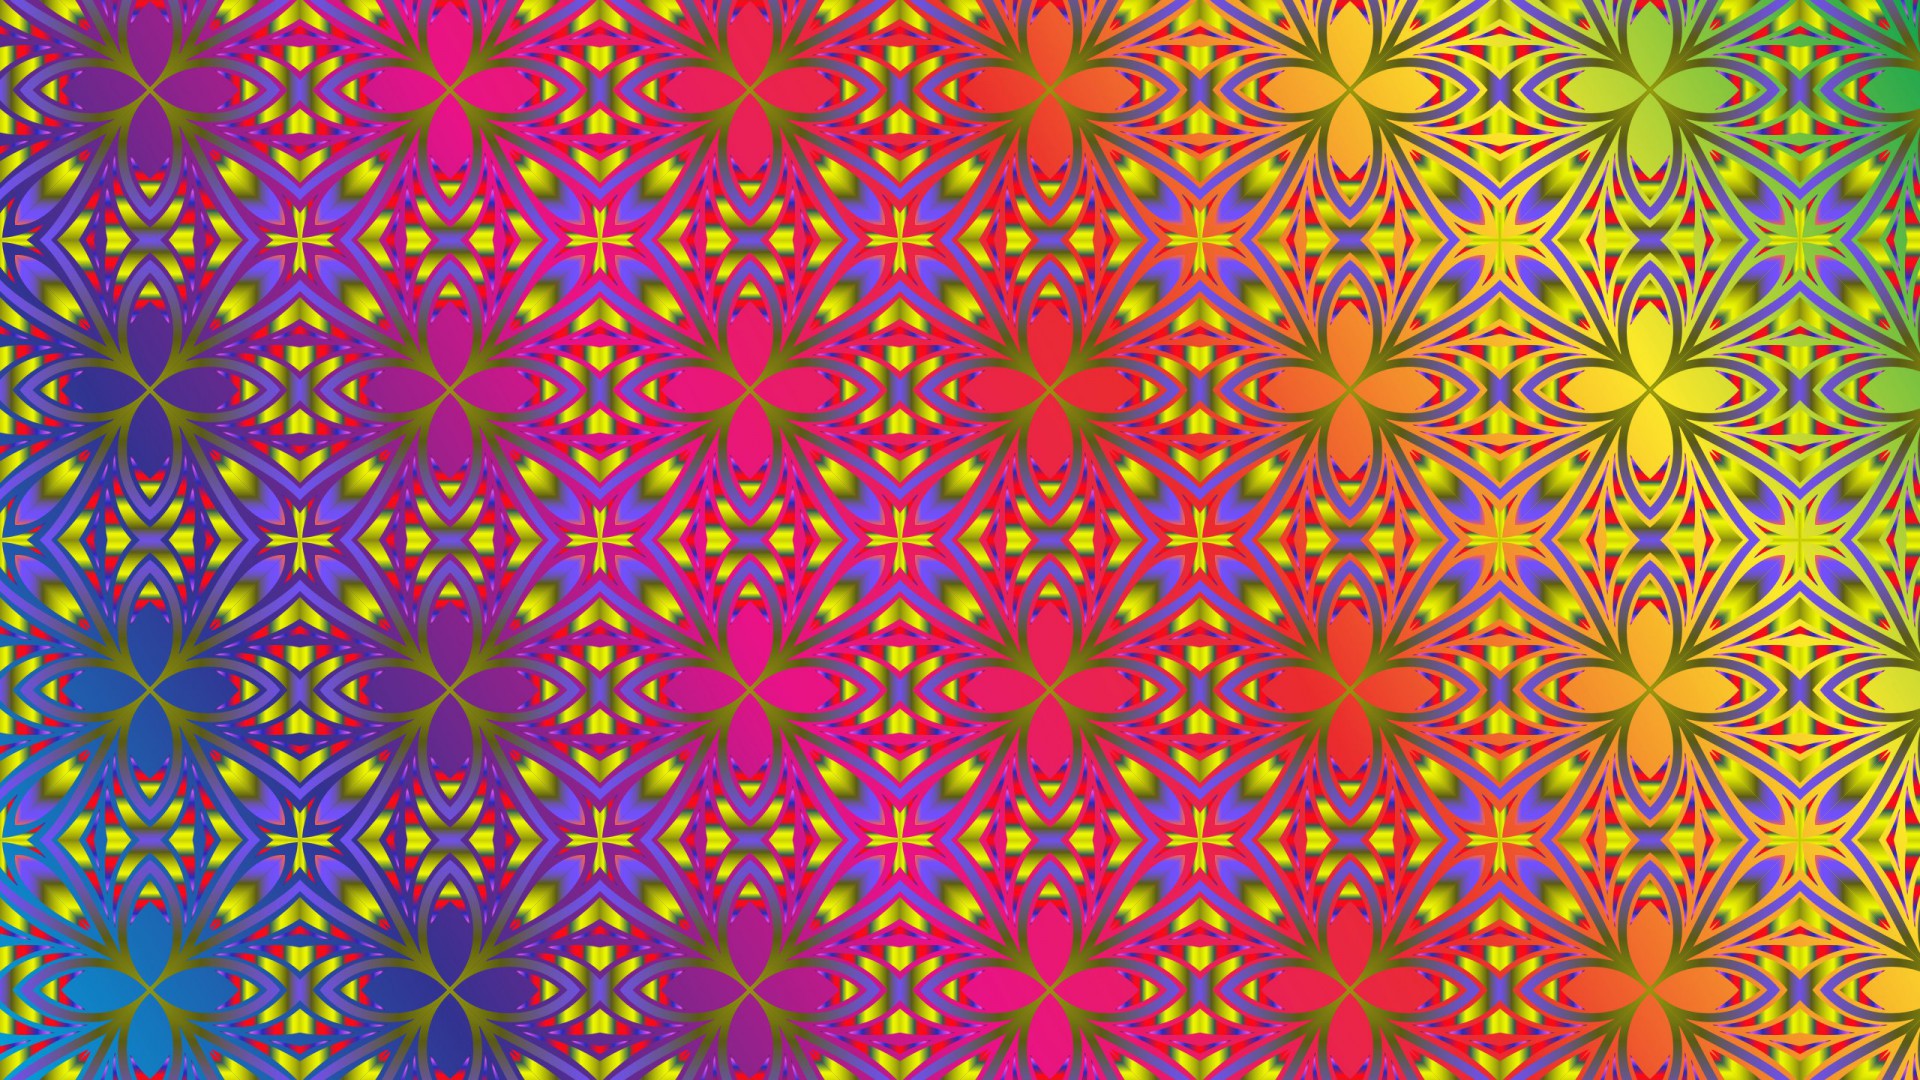 Tapeta, obrázek Ornamenty - 1920x1080 px. Wallpaper na plochu PC zdarma